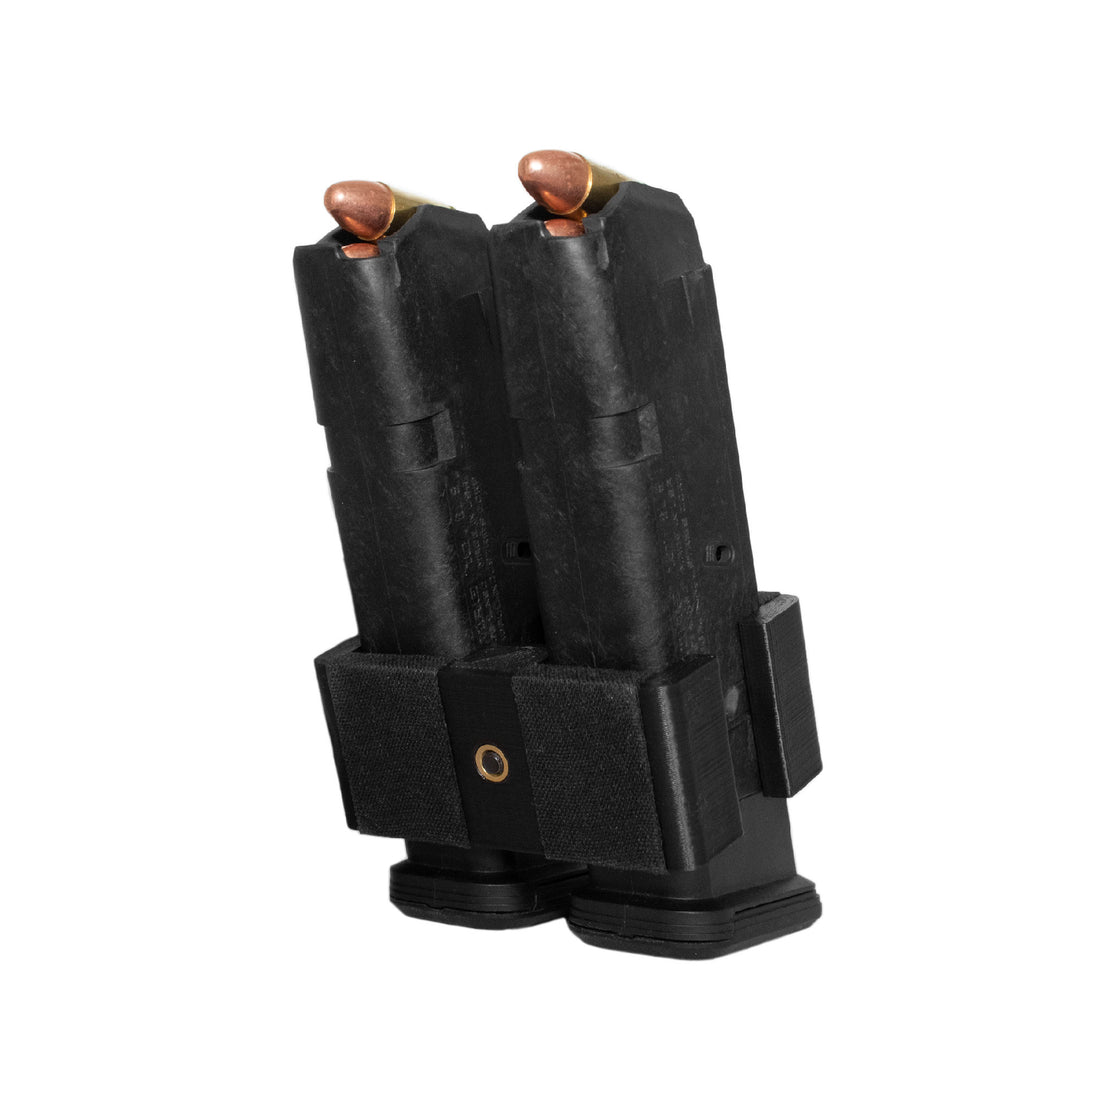 Glock Mag Coupler (9mm/.40) - Oscar Delta Co.